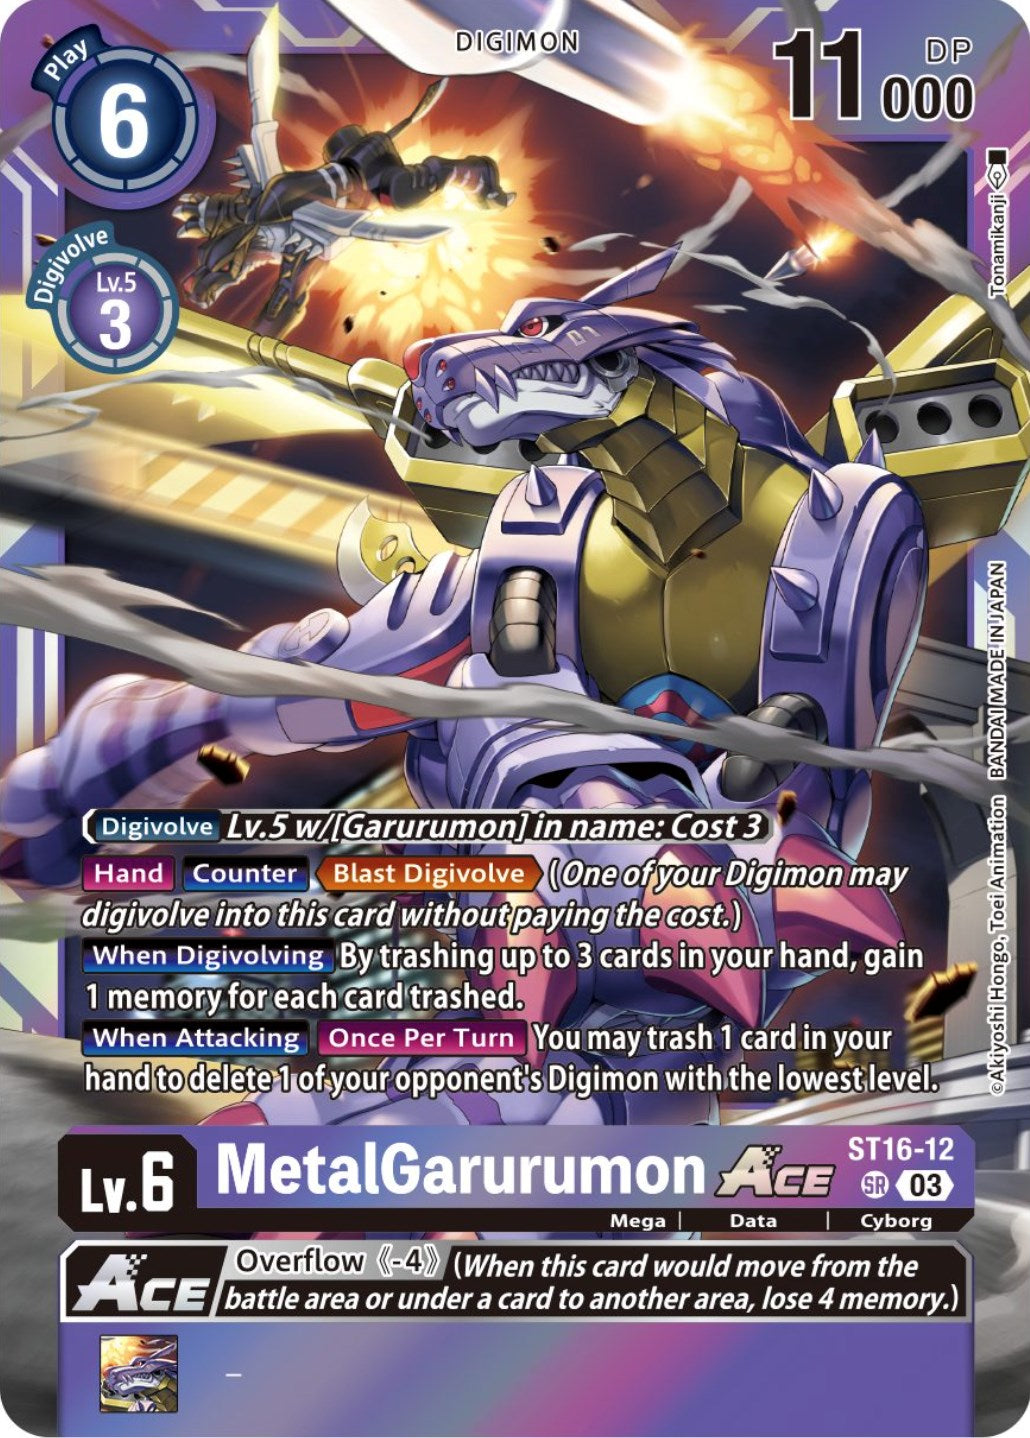 MetalGarurumon Ace [ST16-12] (Box Topper) [Versus Royal Knights Booster] | Amazing Games TCG